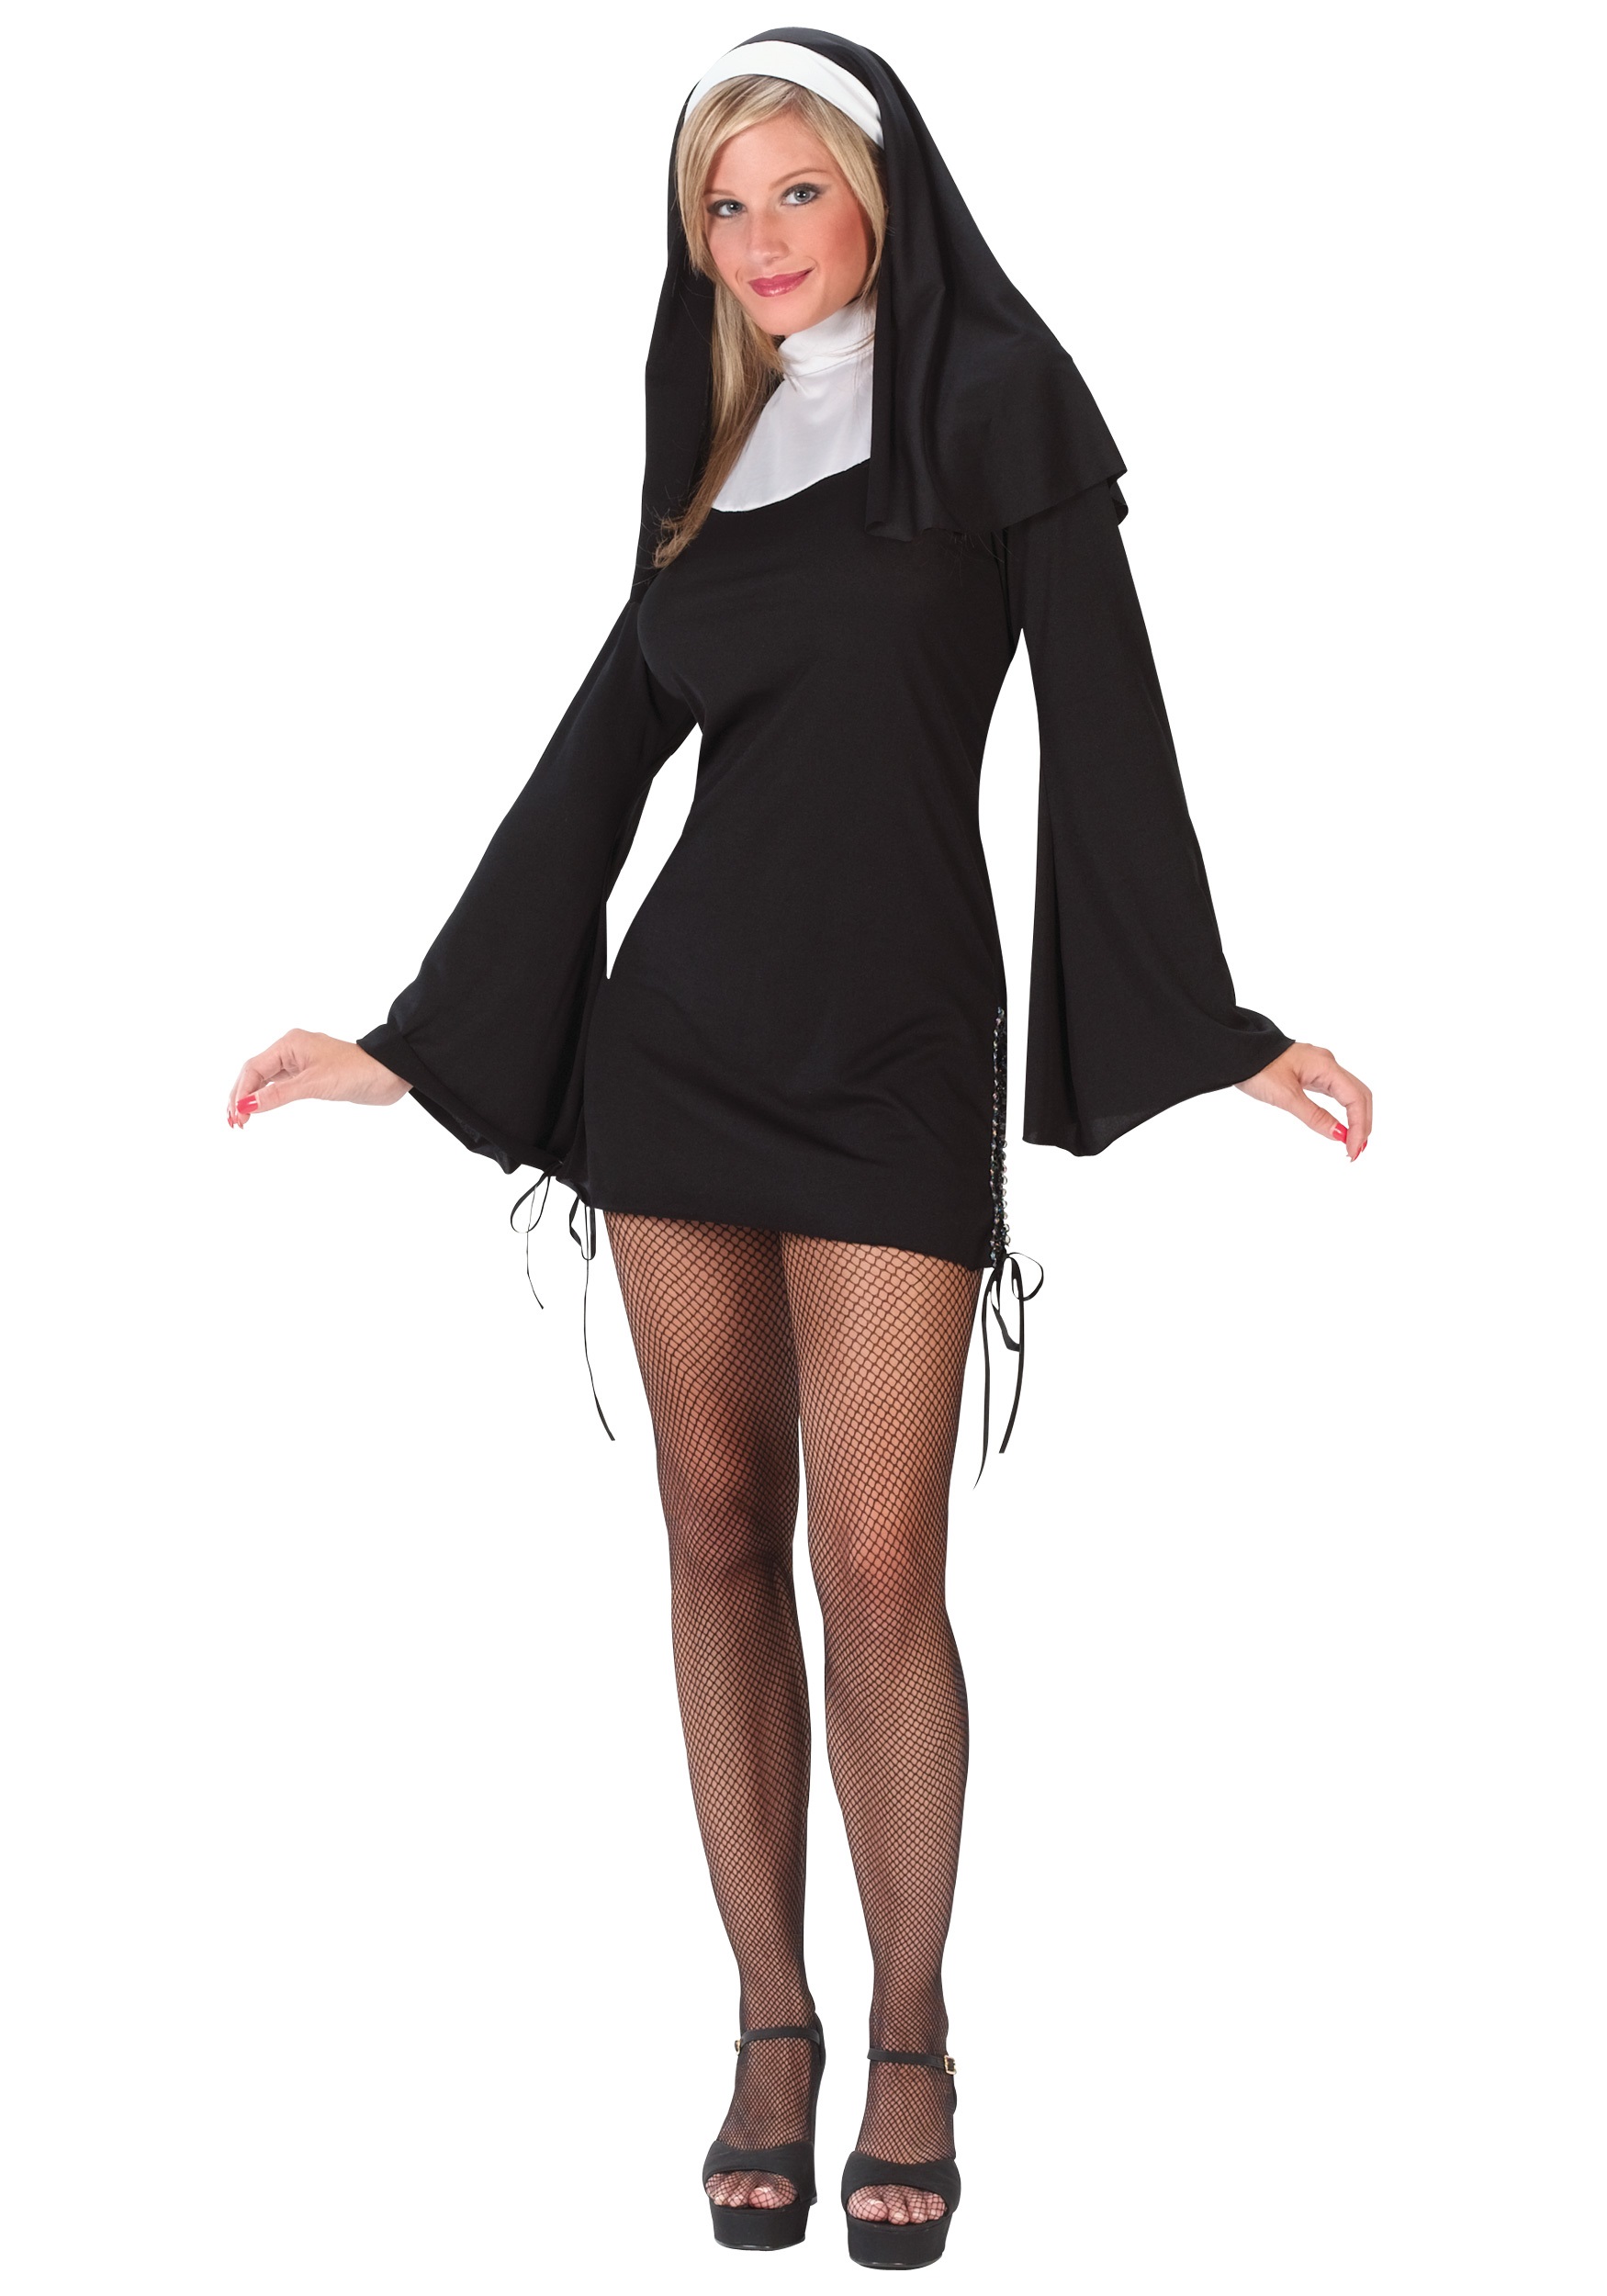 Naughty Nun Adult Costume